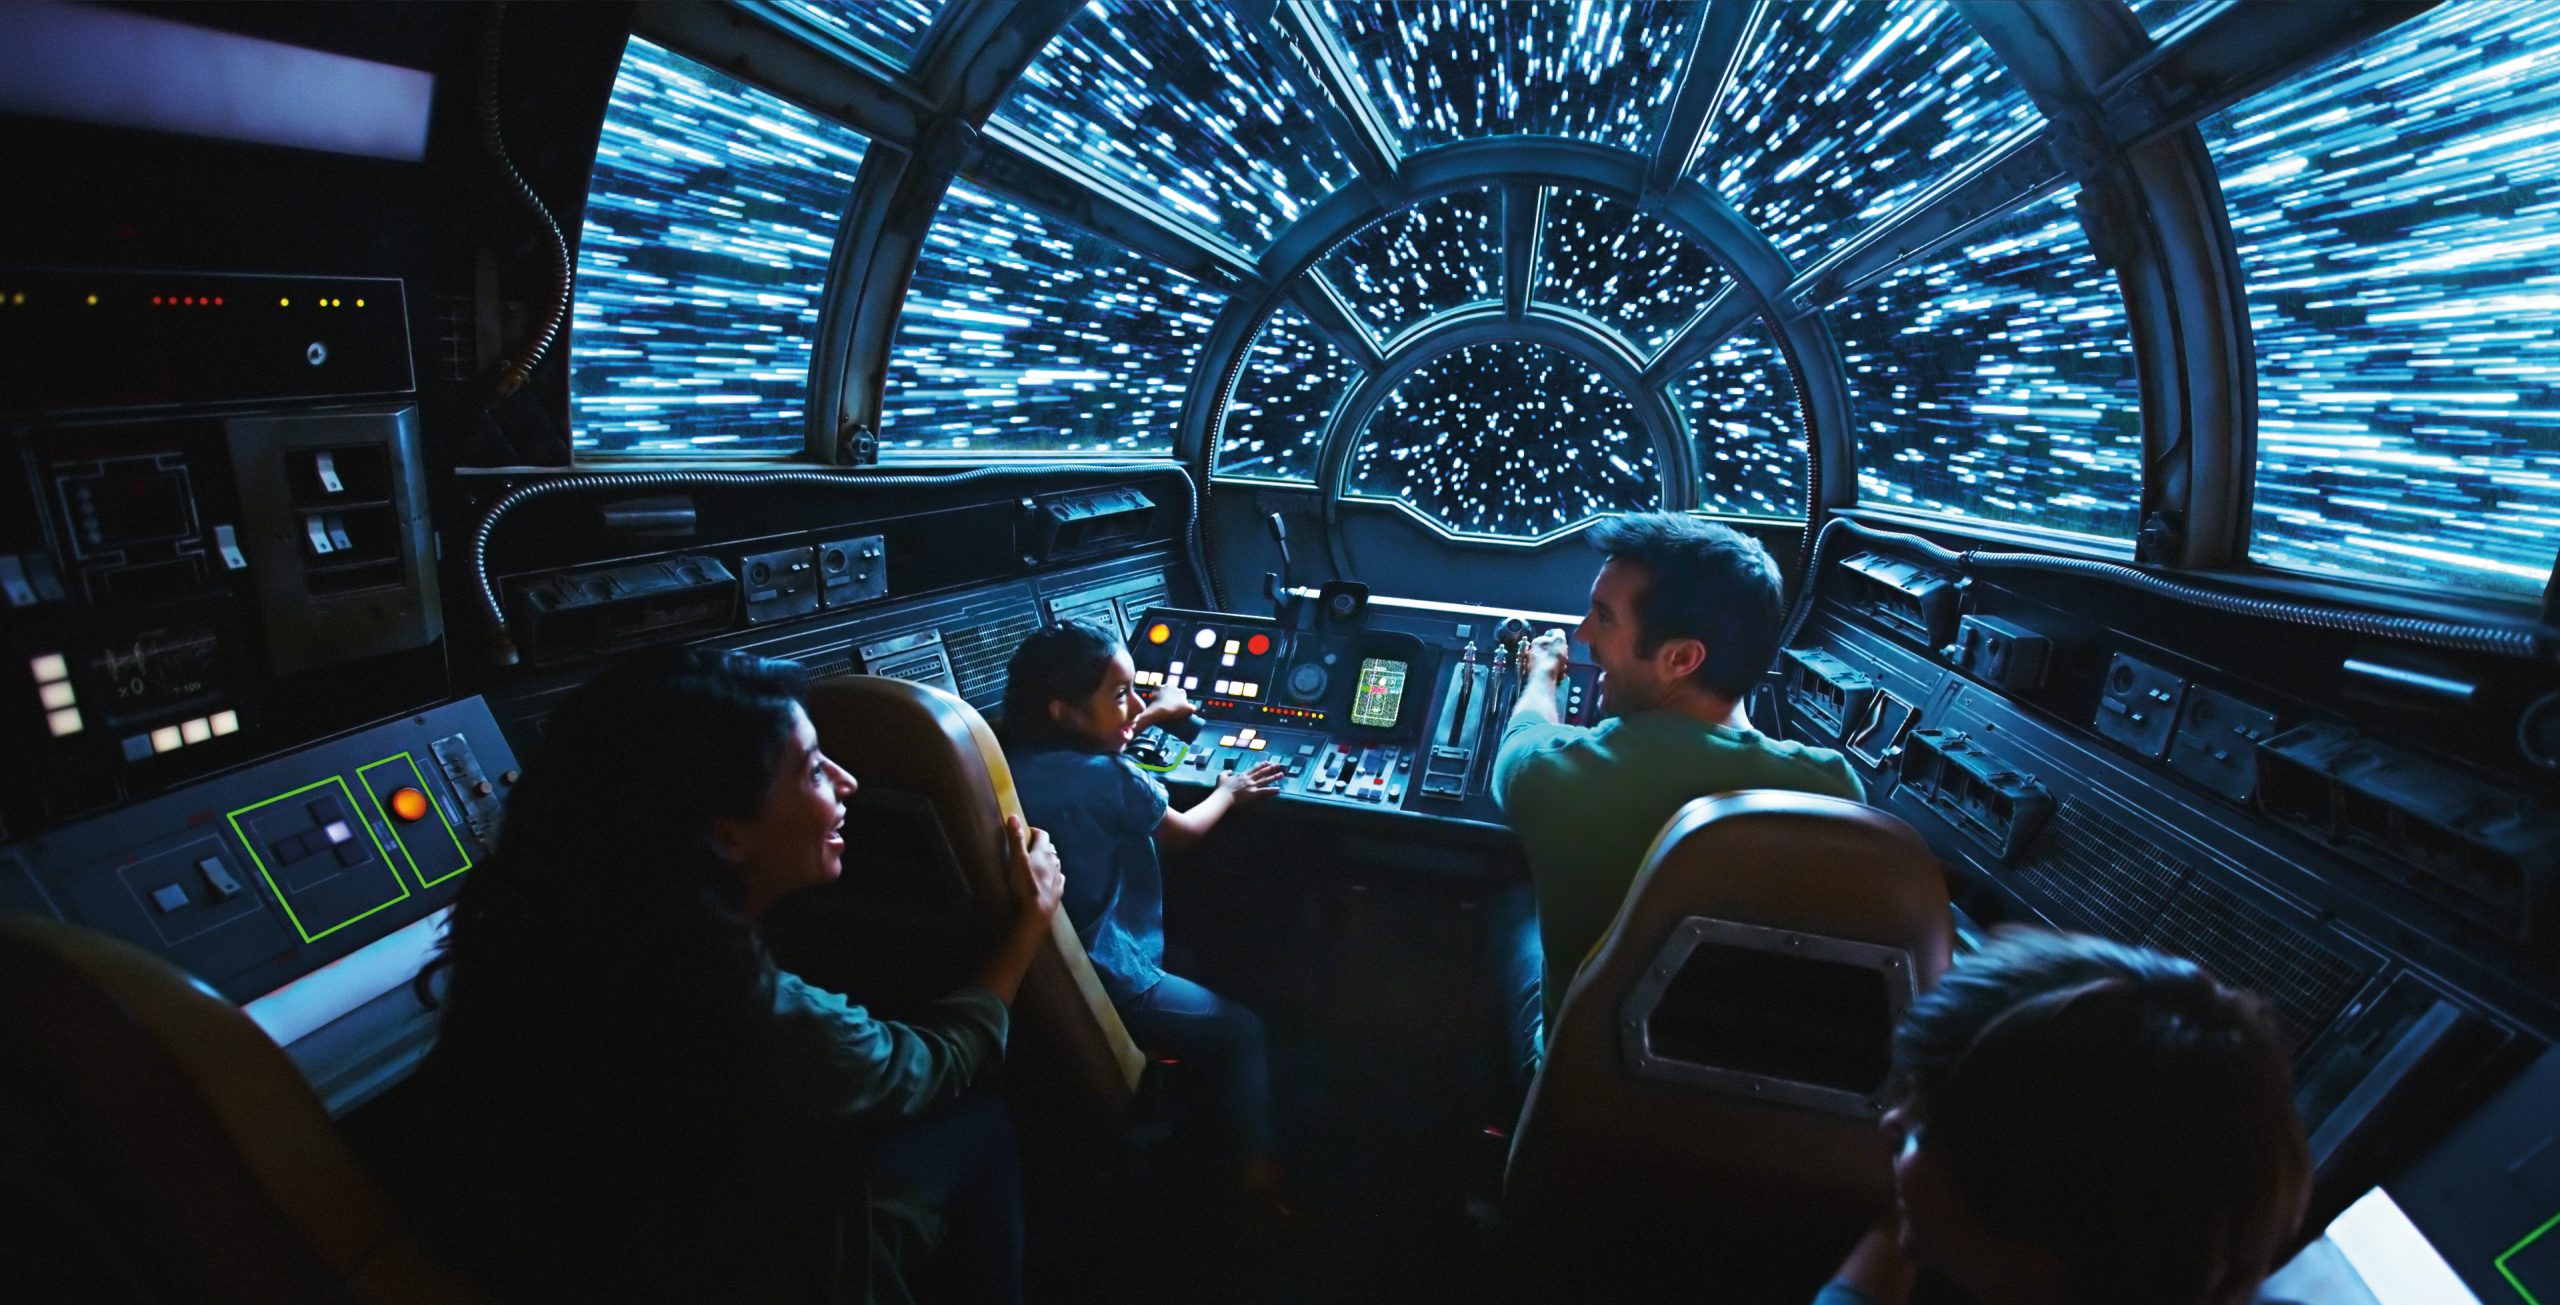 Star Wars Galaxy’s Edge at Disney World – Planning Tips